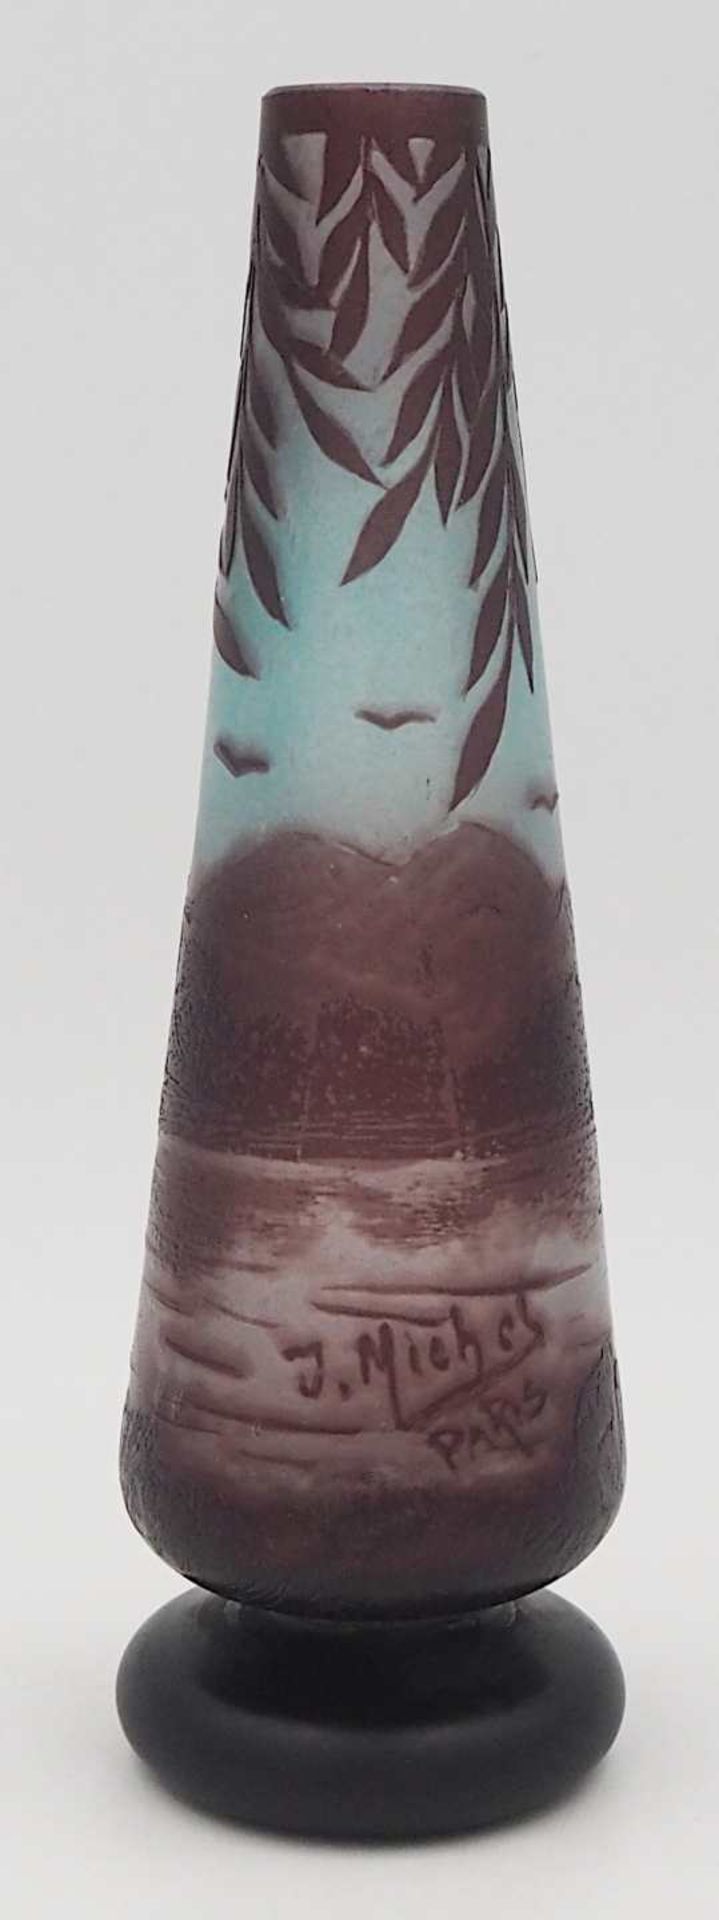 1 Vase Glas, gem. J. MICHEL, Paris, wohl 1920er/30er Jahre farbloses Glas mit mehrschi